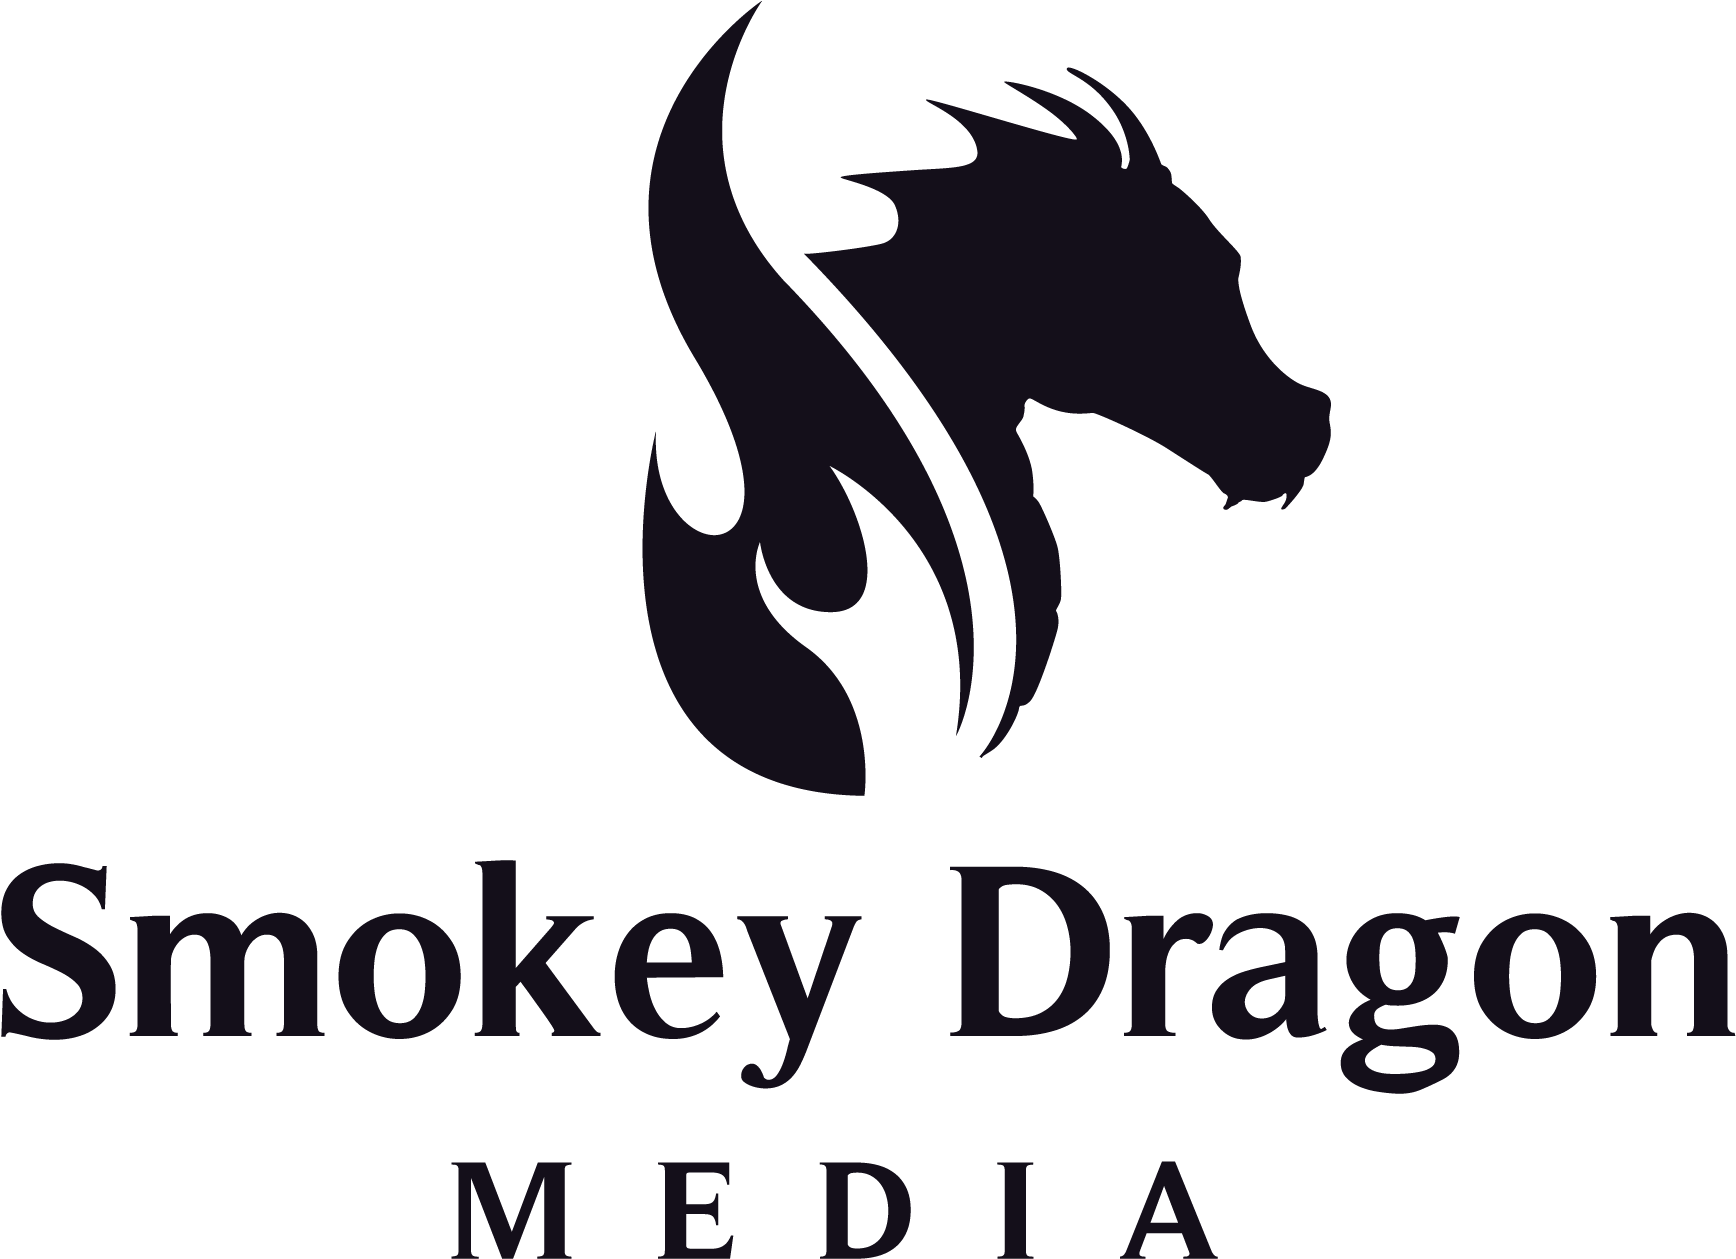 Dragon media